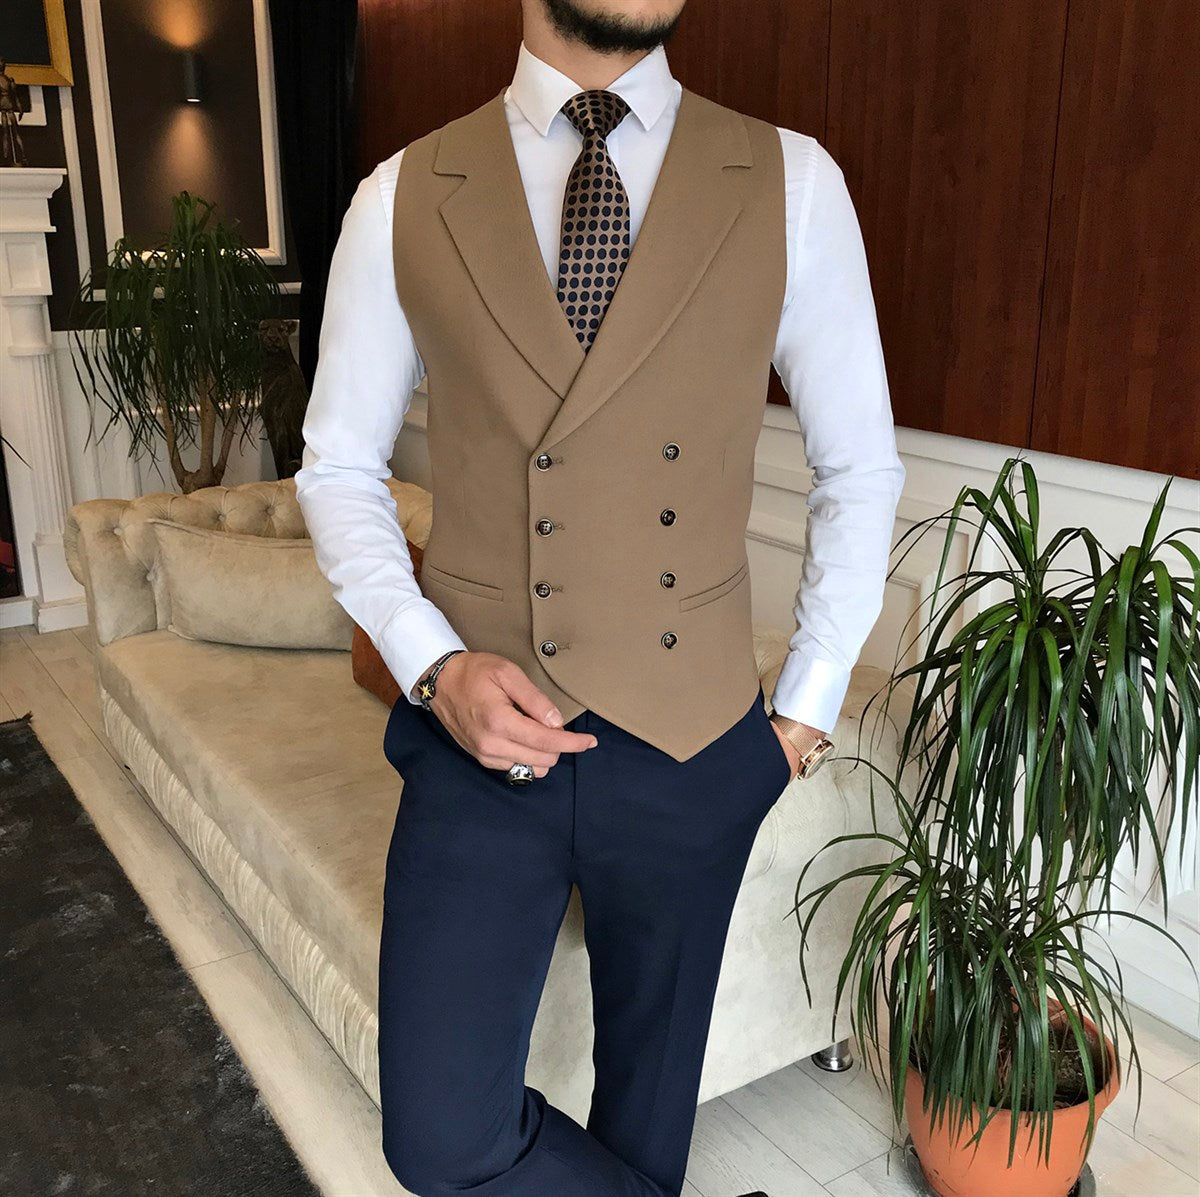 Bojoni Grey Plaid Slim-Fit Suit 3-Piece 